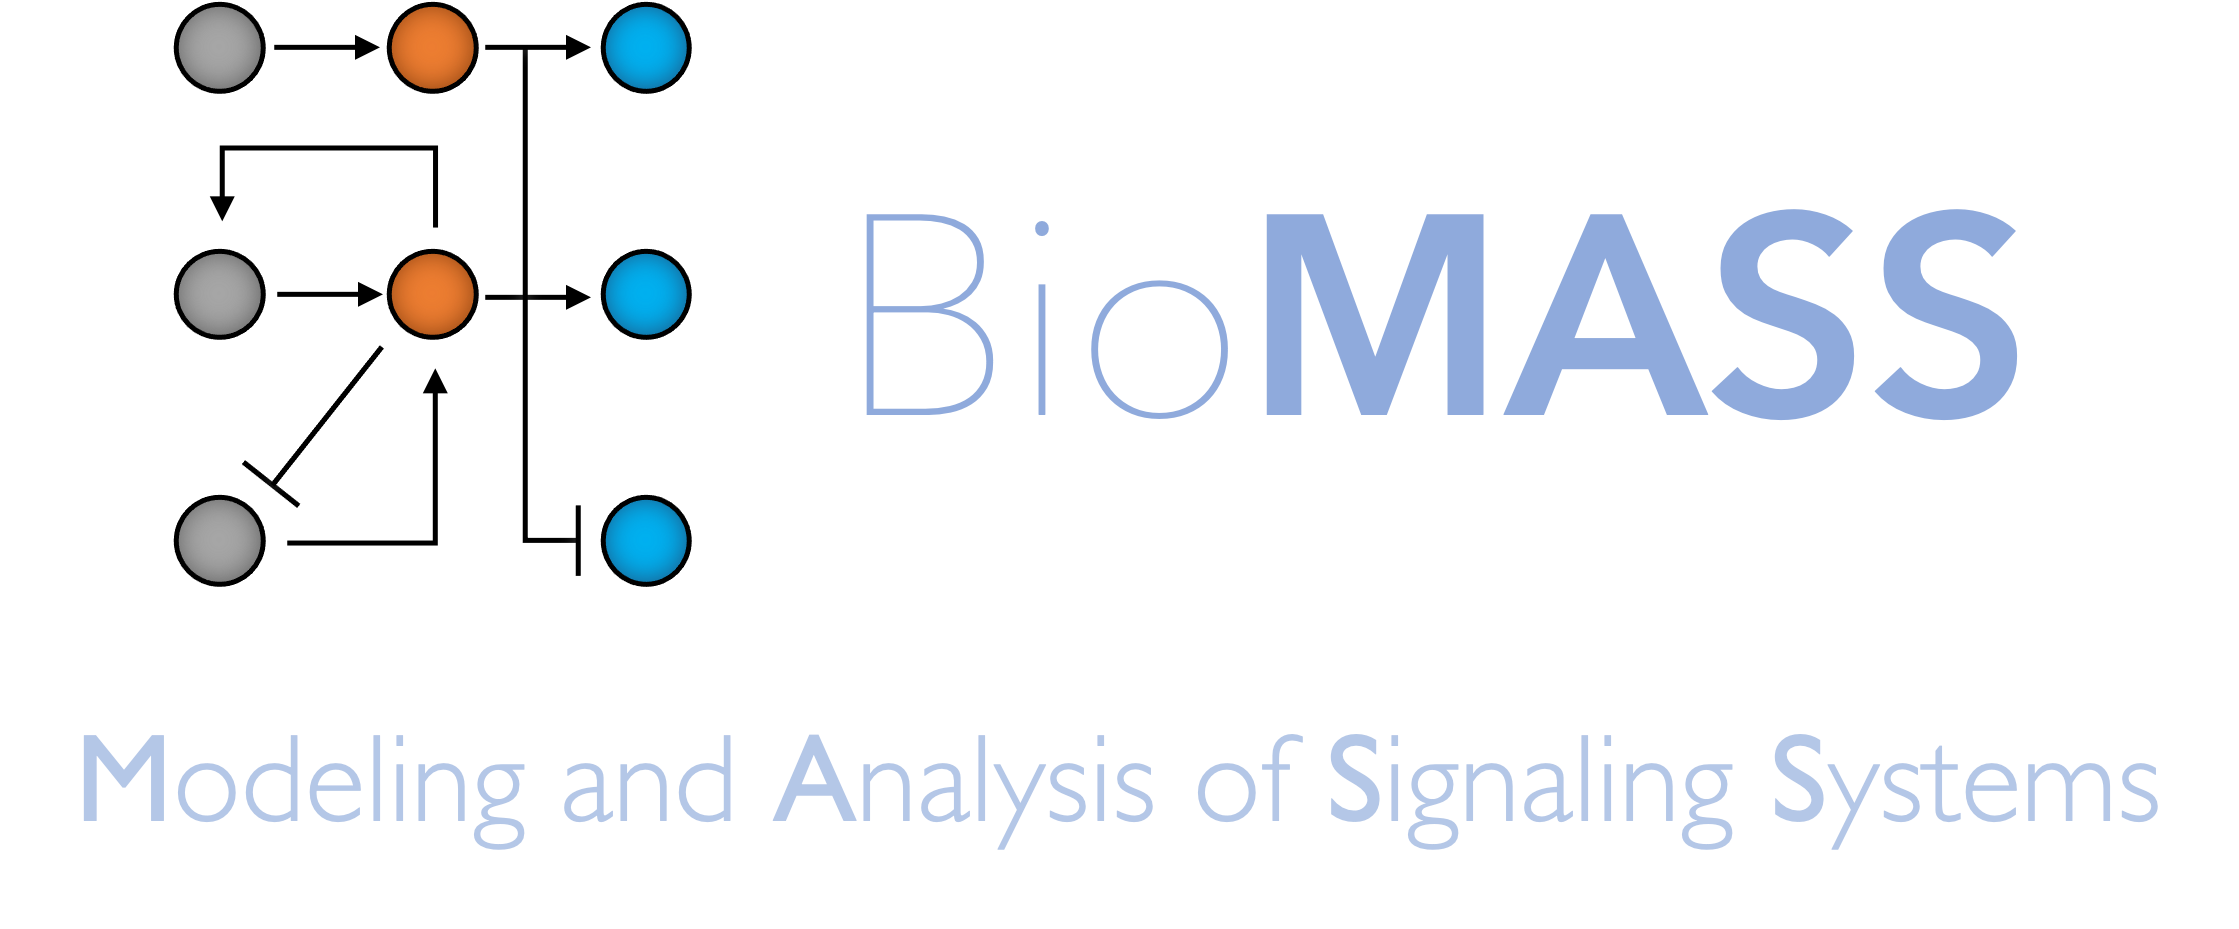 _images/biomass-logo.png